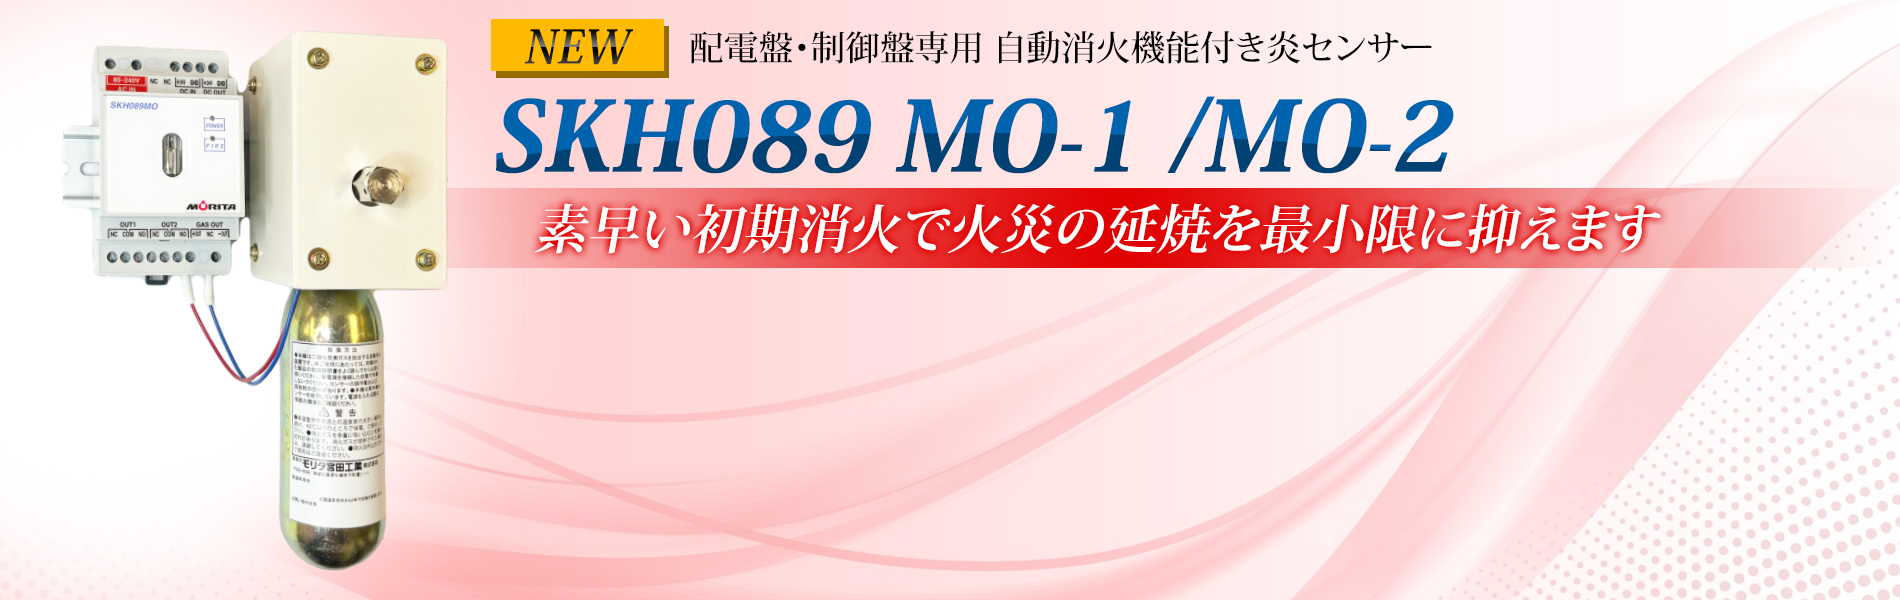 SKH089MO-1／MO-2 製品情報